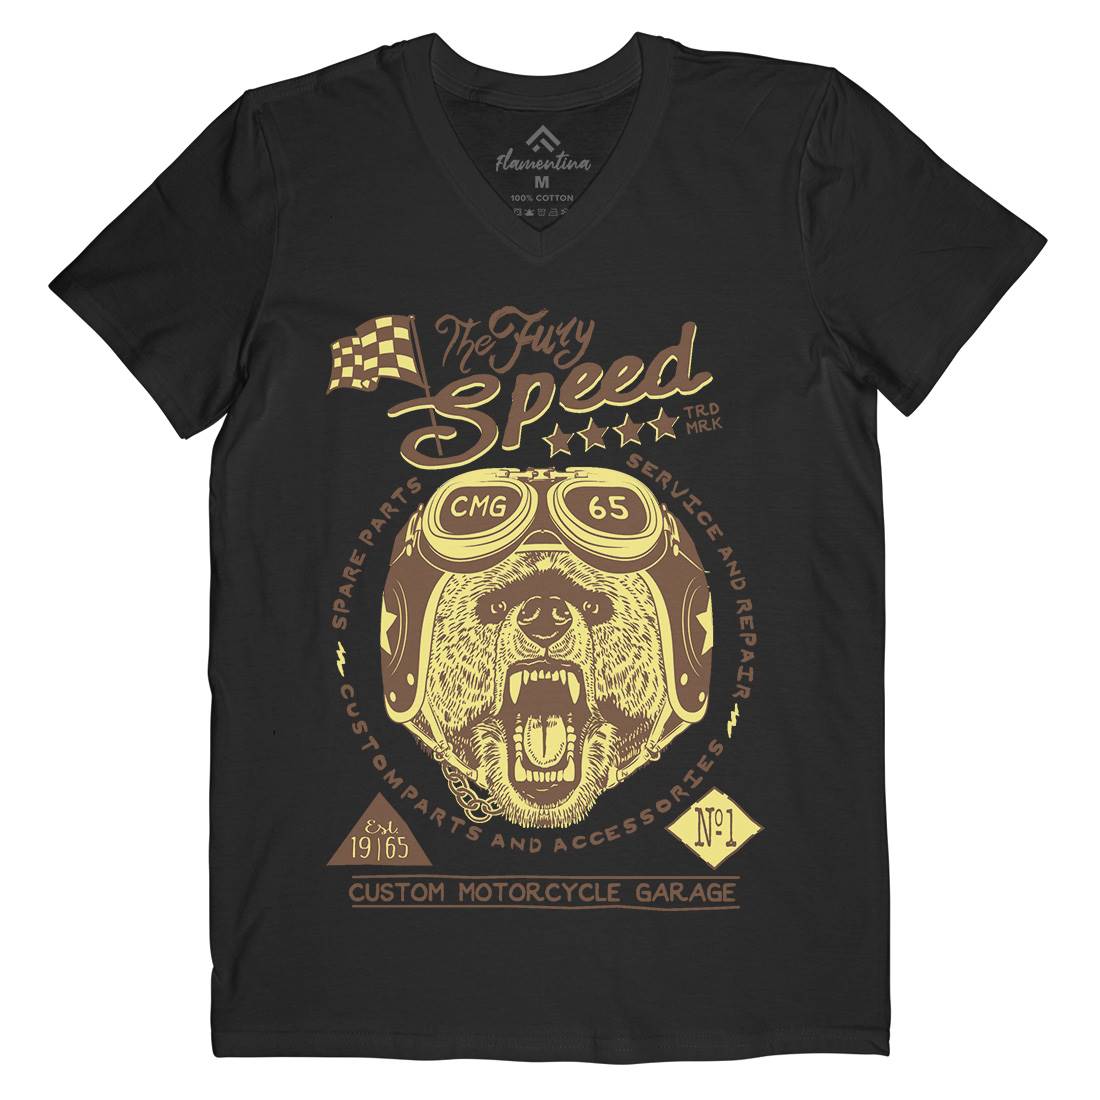 Fury Speed Mens Organic V-Neck T-Shirt Motorcycles A997